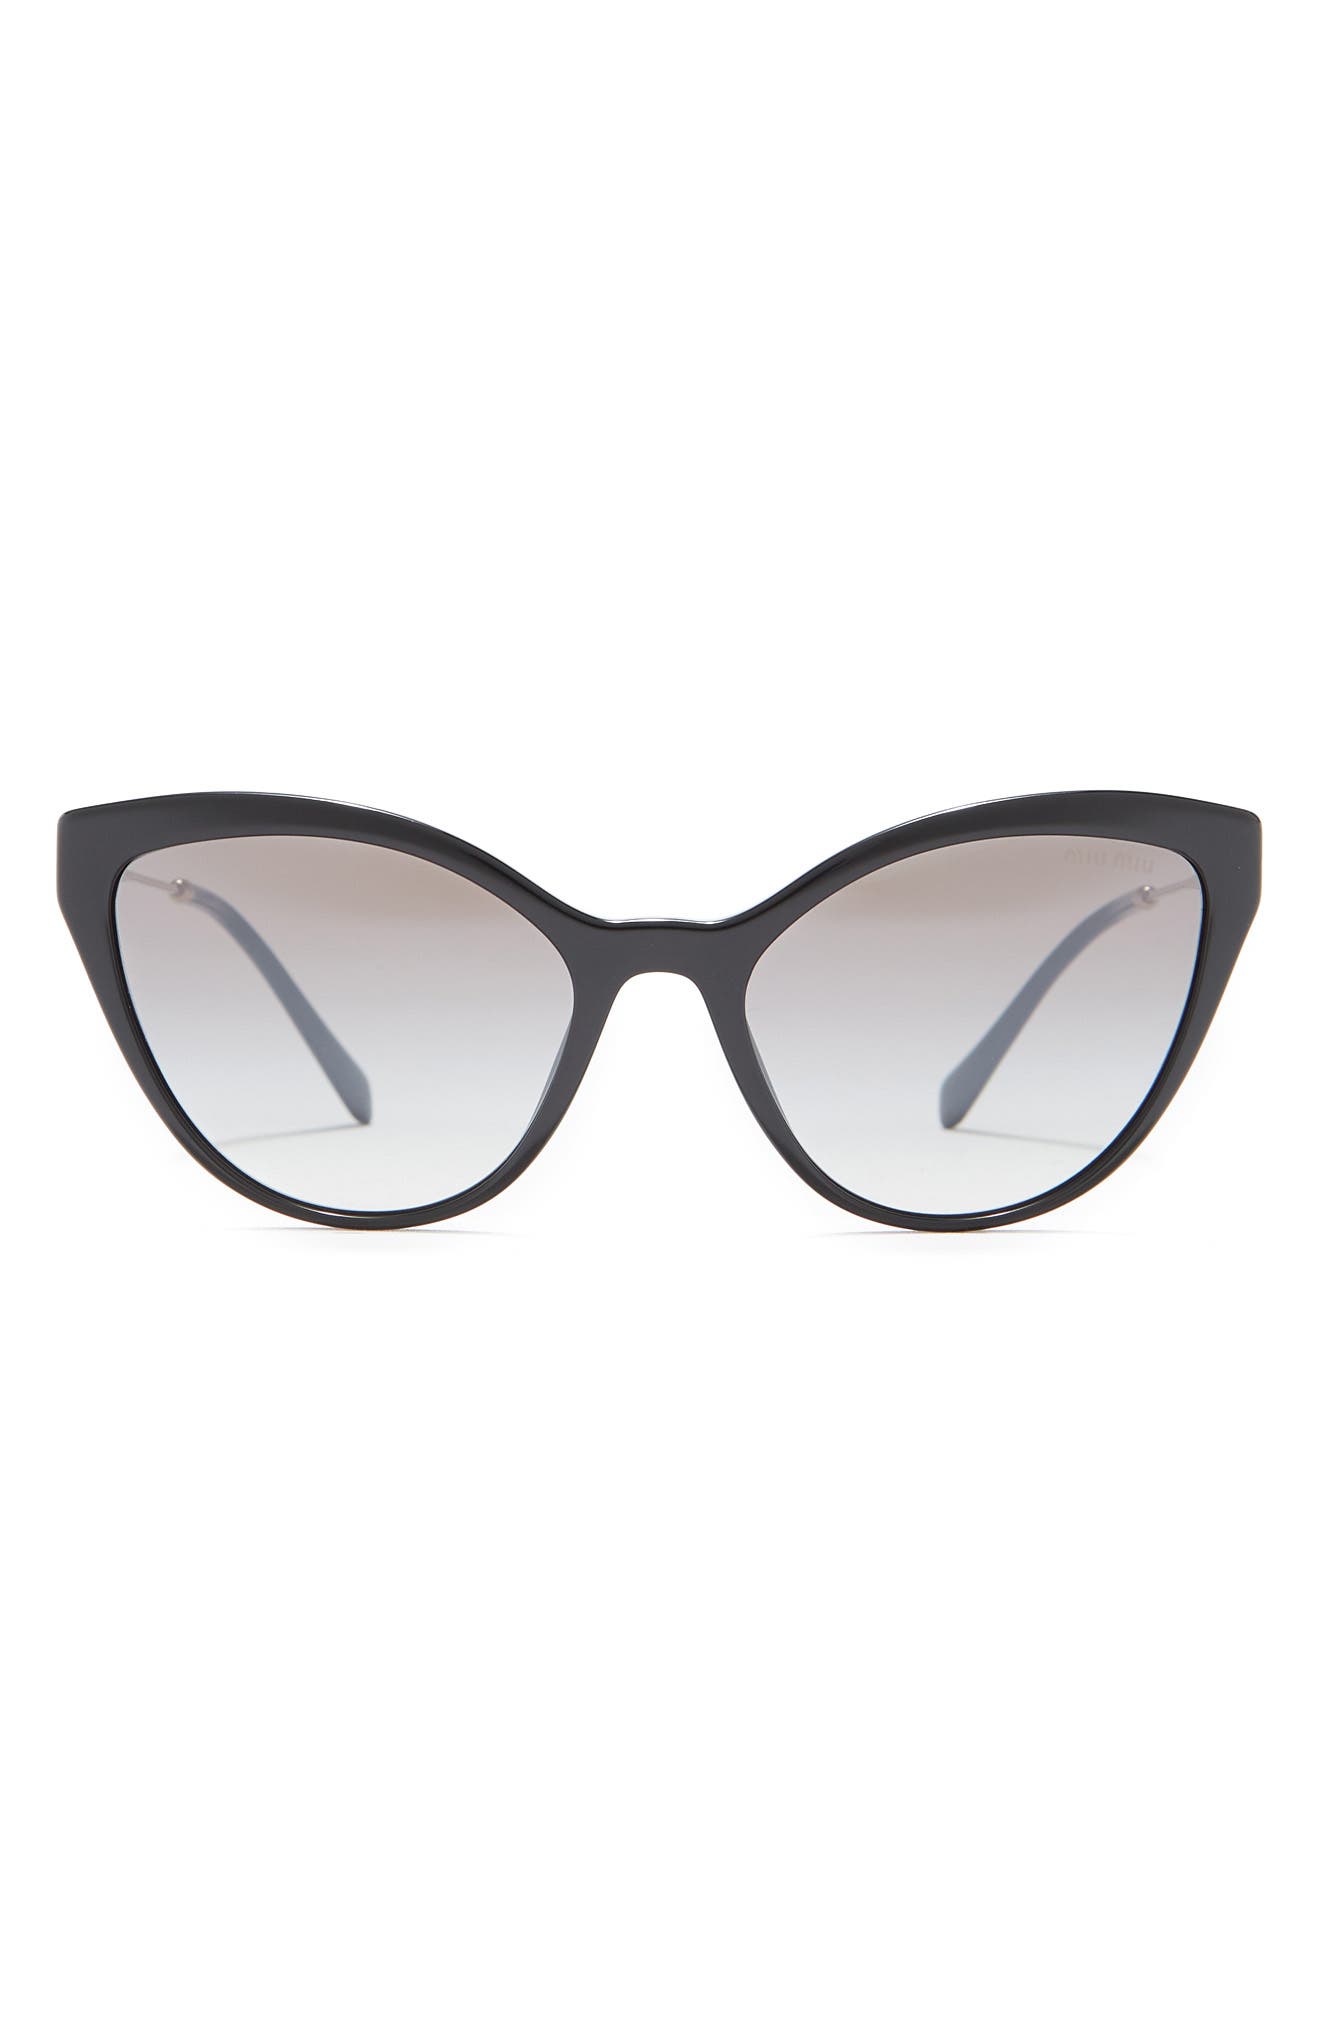 Miu Miu 55mm Cat Eye Sunglasses in Black Gradient Mirror at Nordstrom